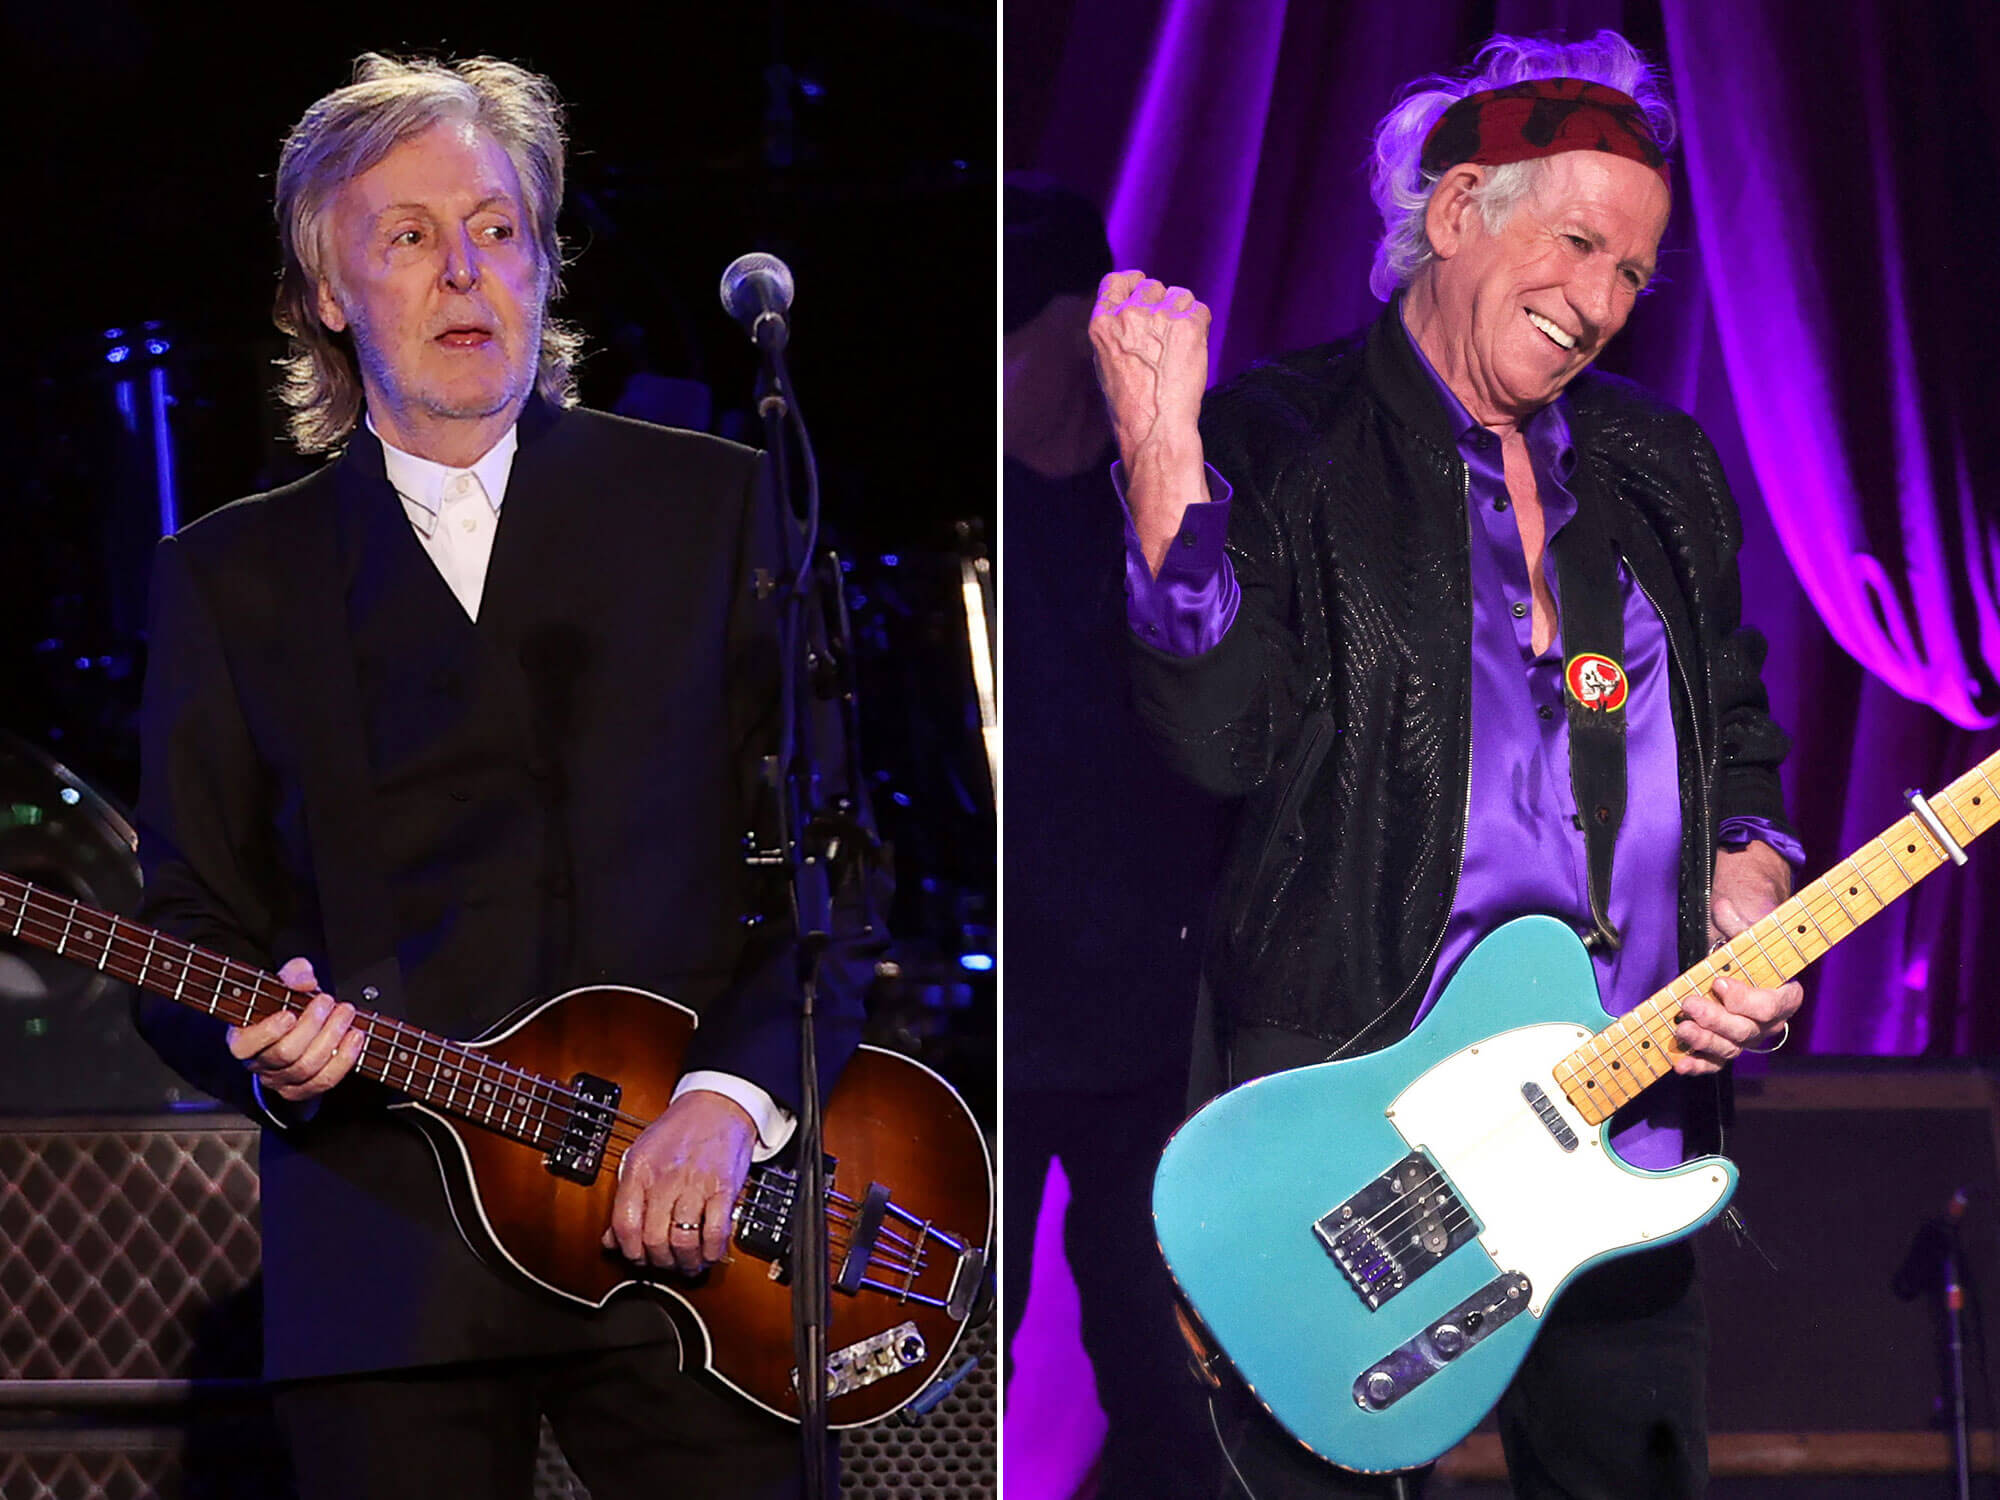 [L-R] Paul McCartney and Keith Richards